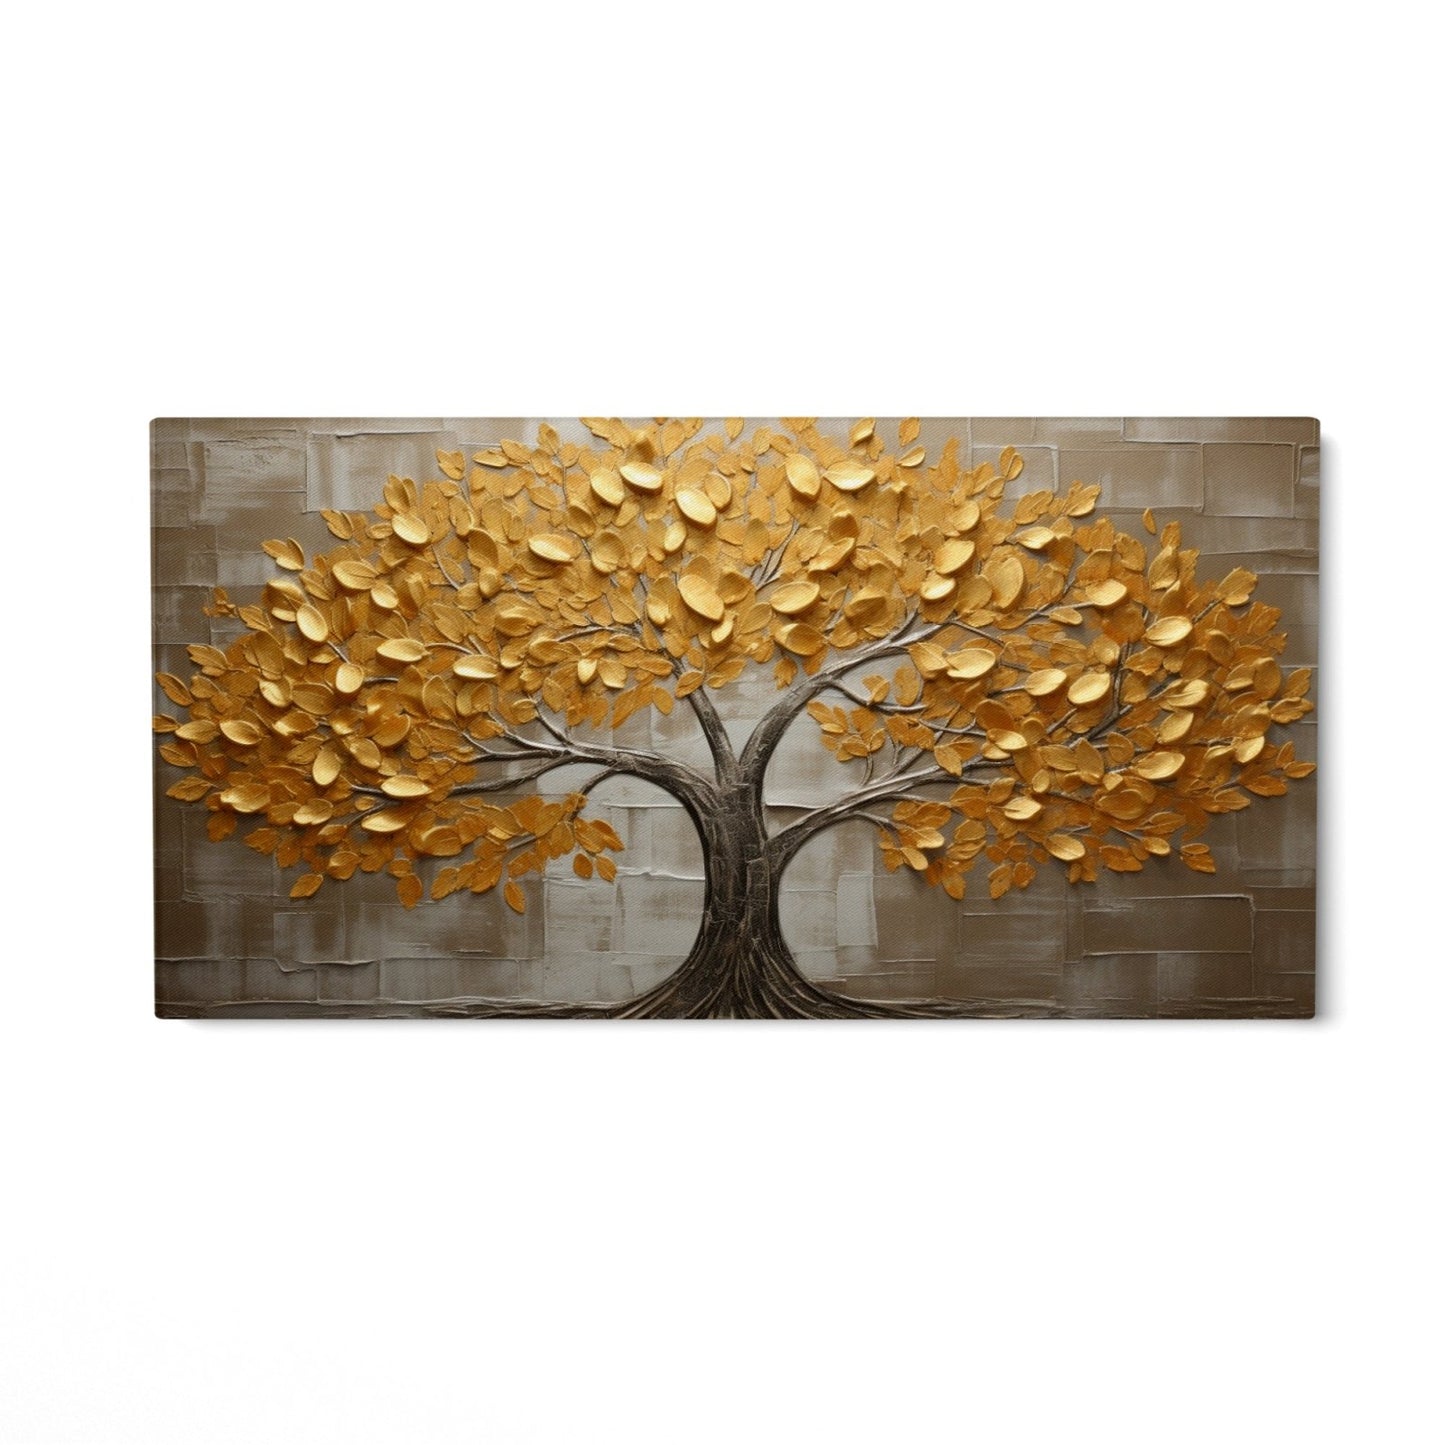 Gold tree